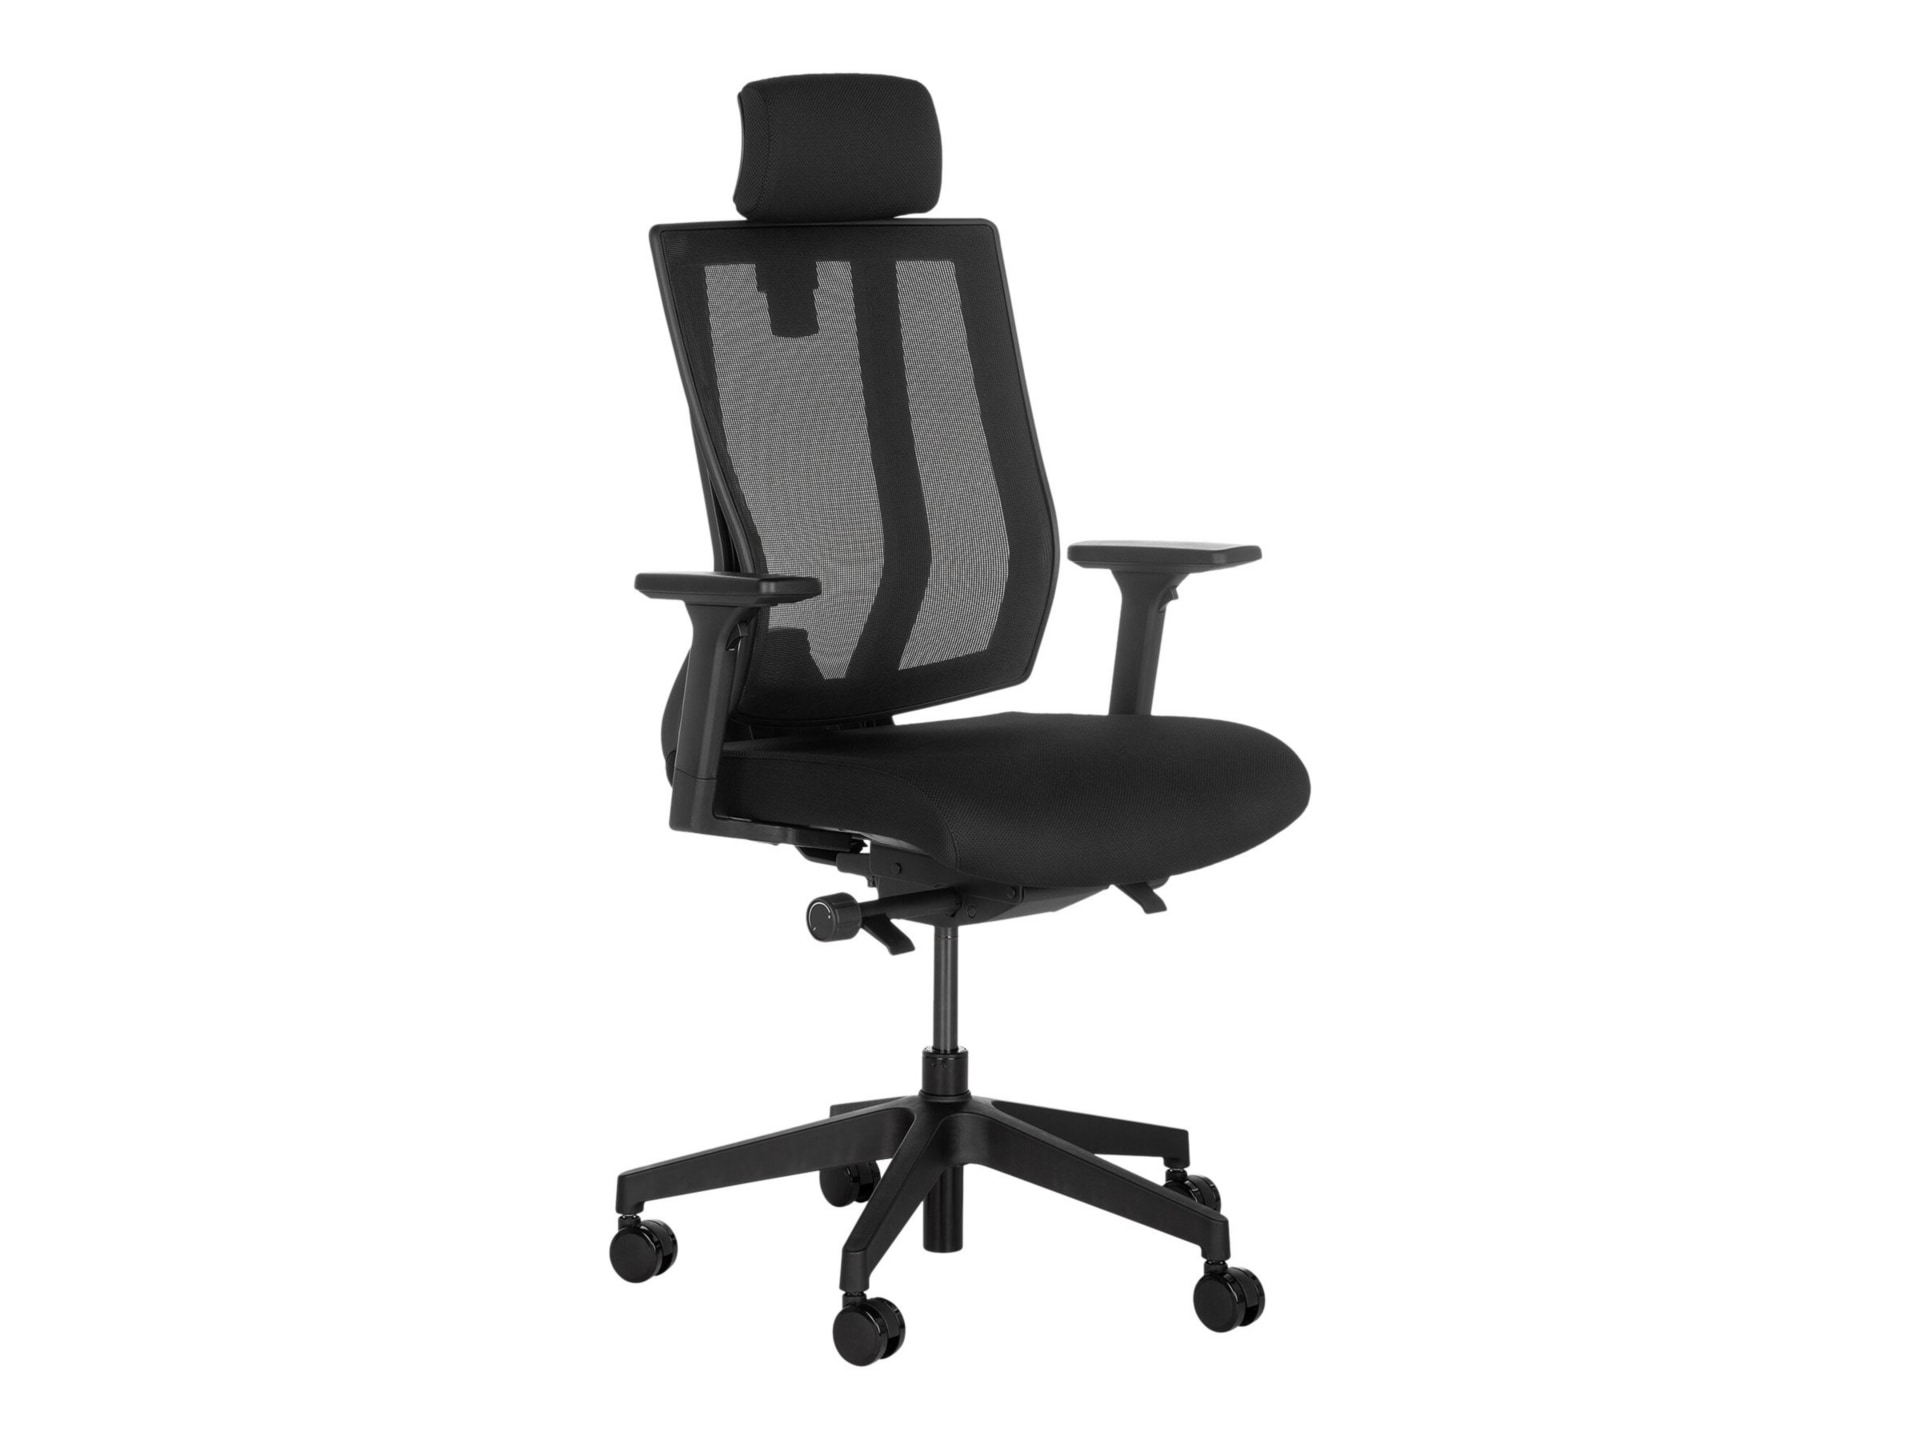 Vari - chair - reinforced mesh - black